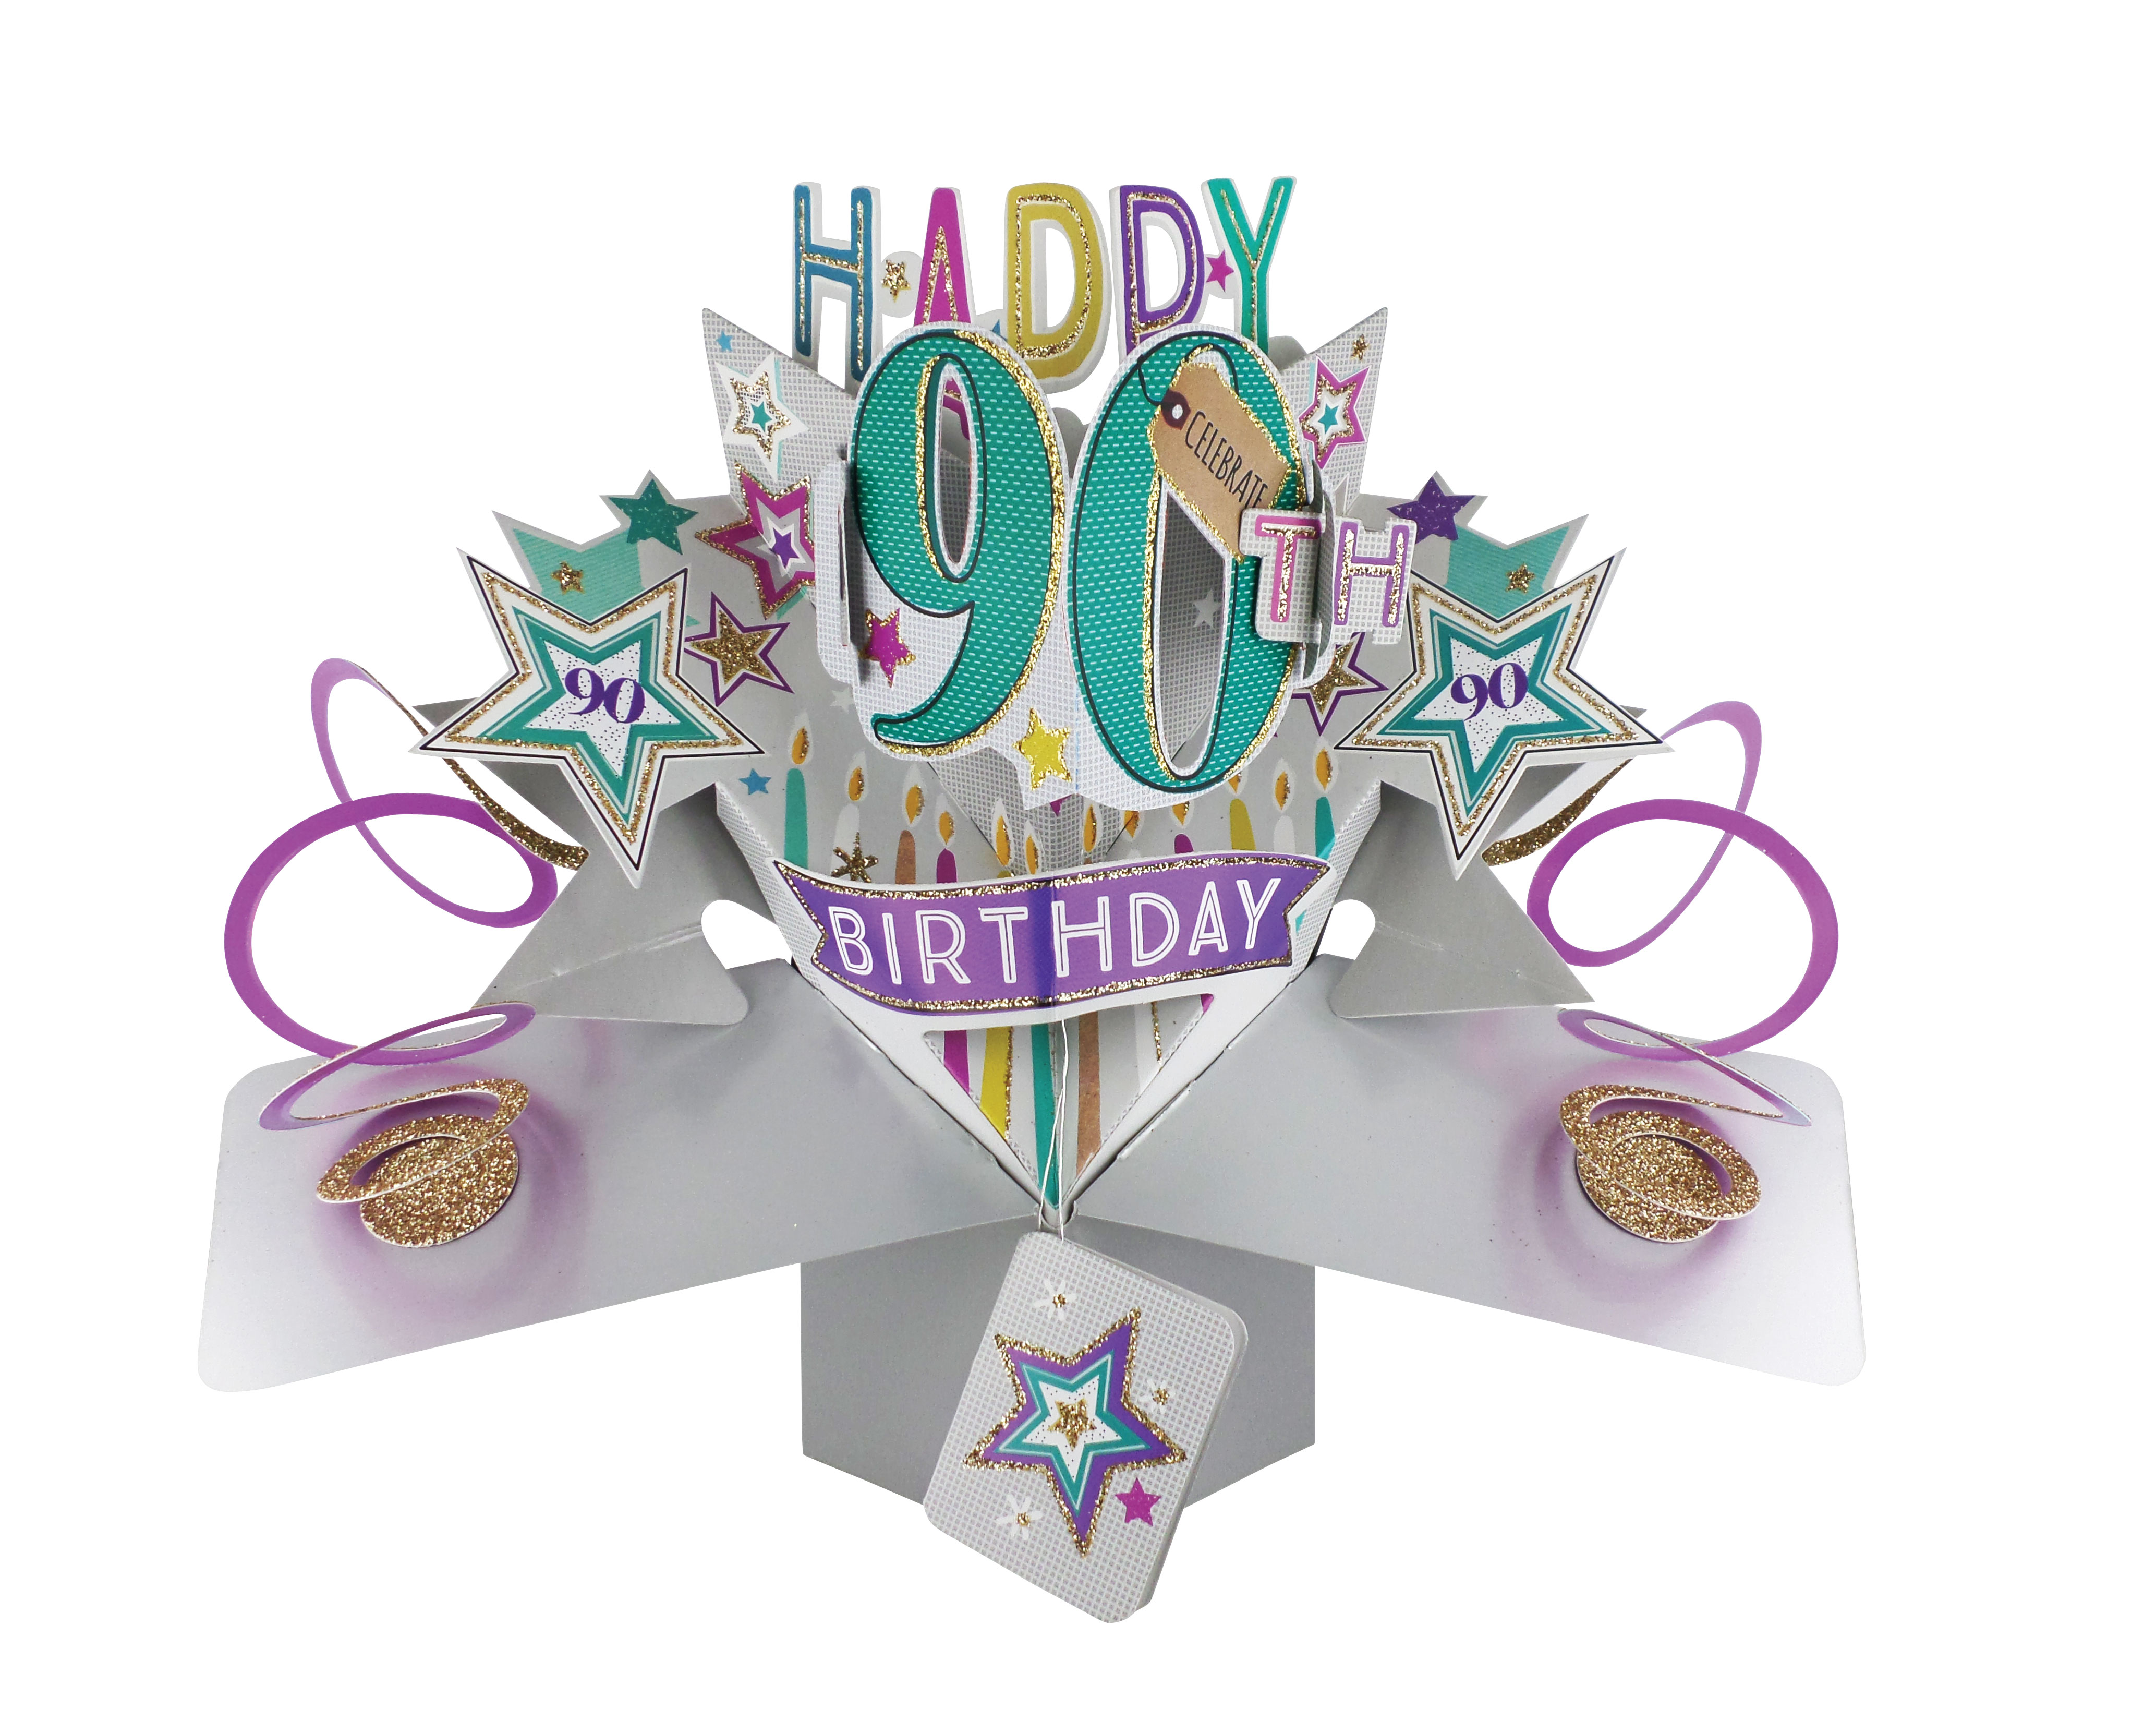 90th Birthday Card Ideas To Make - Printable Templates Free